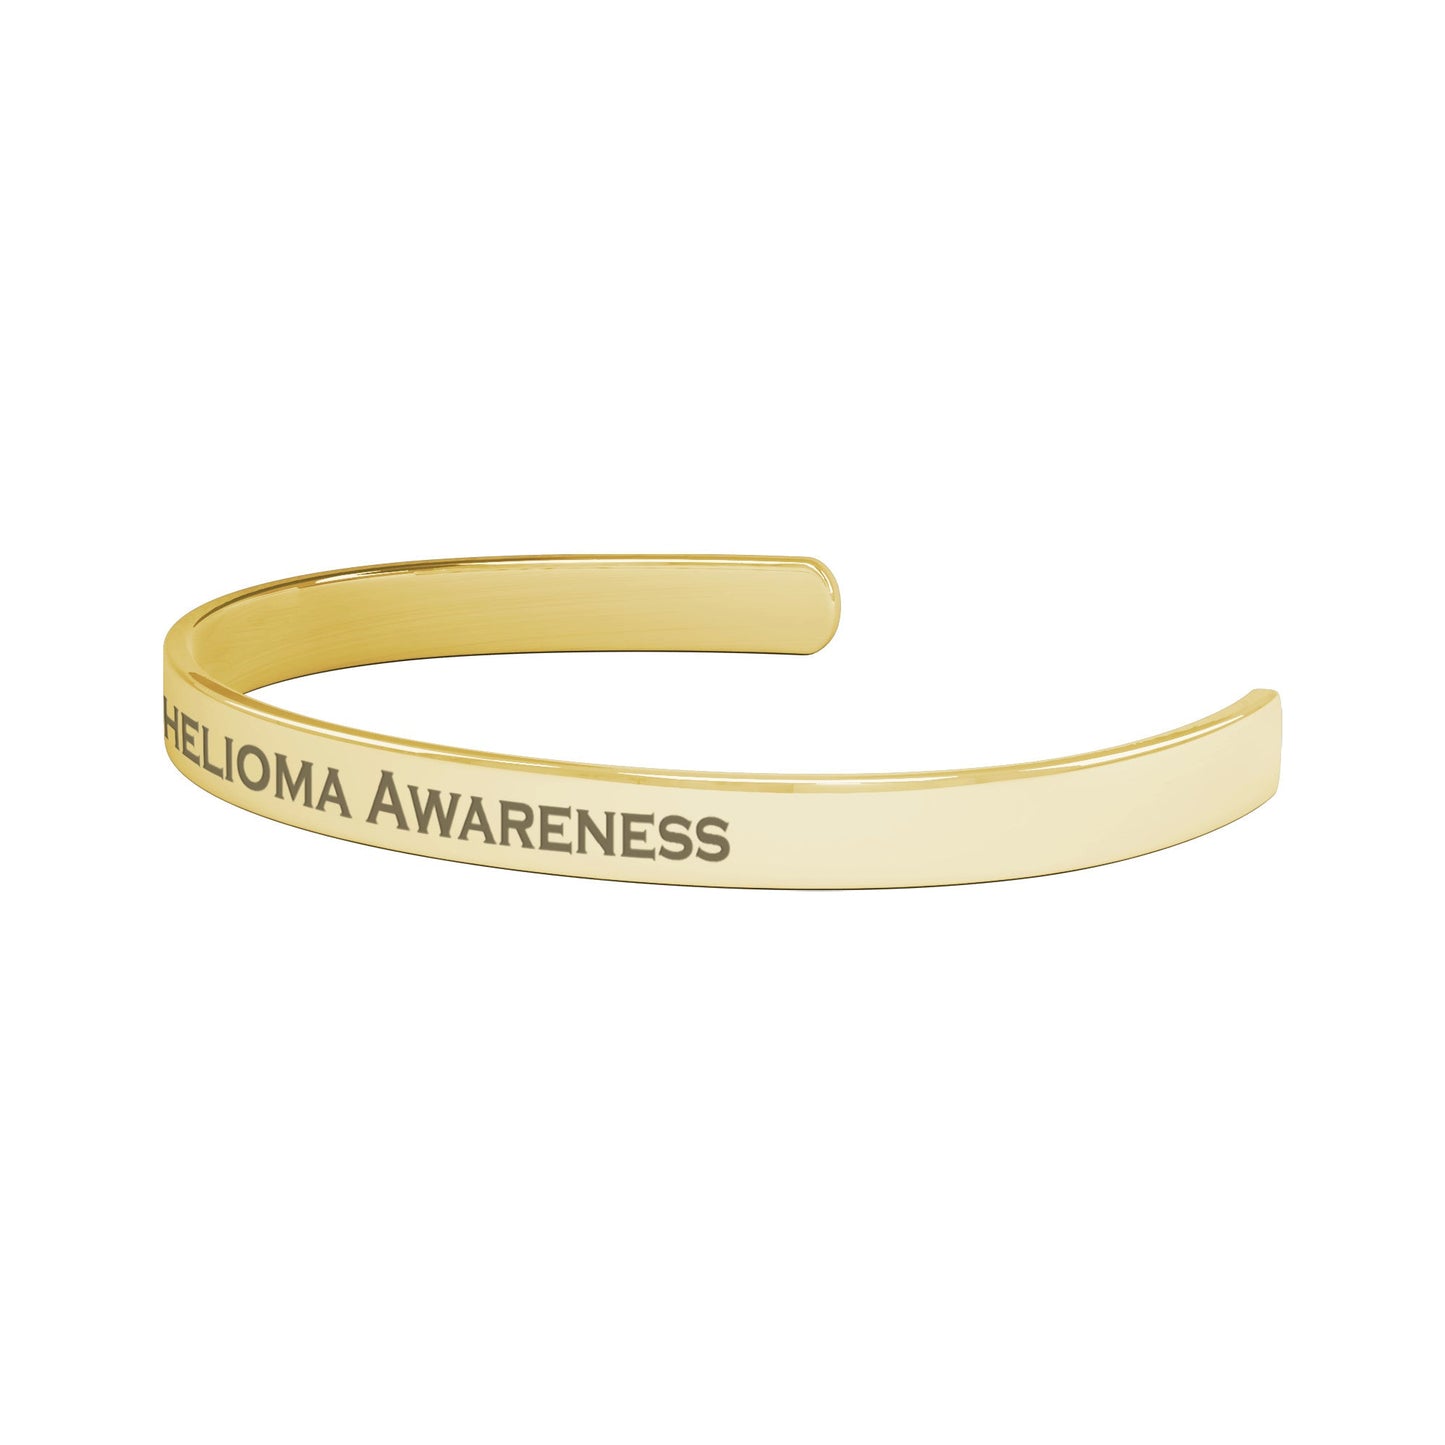 Personalized Mesothelioma Awareness Cuff Bracelet |x|